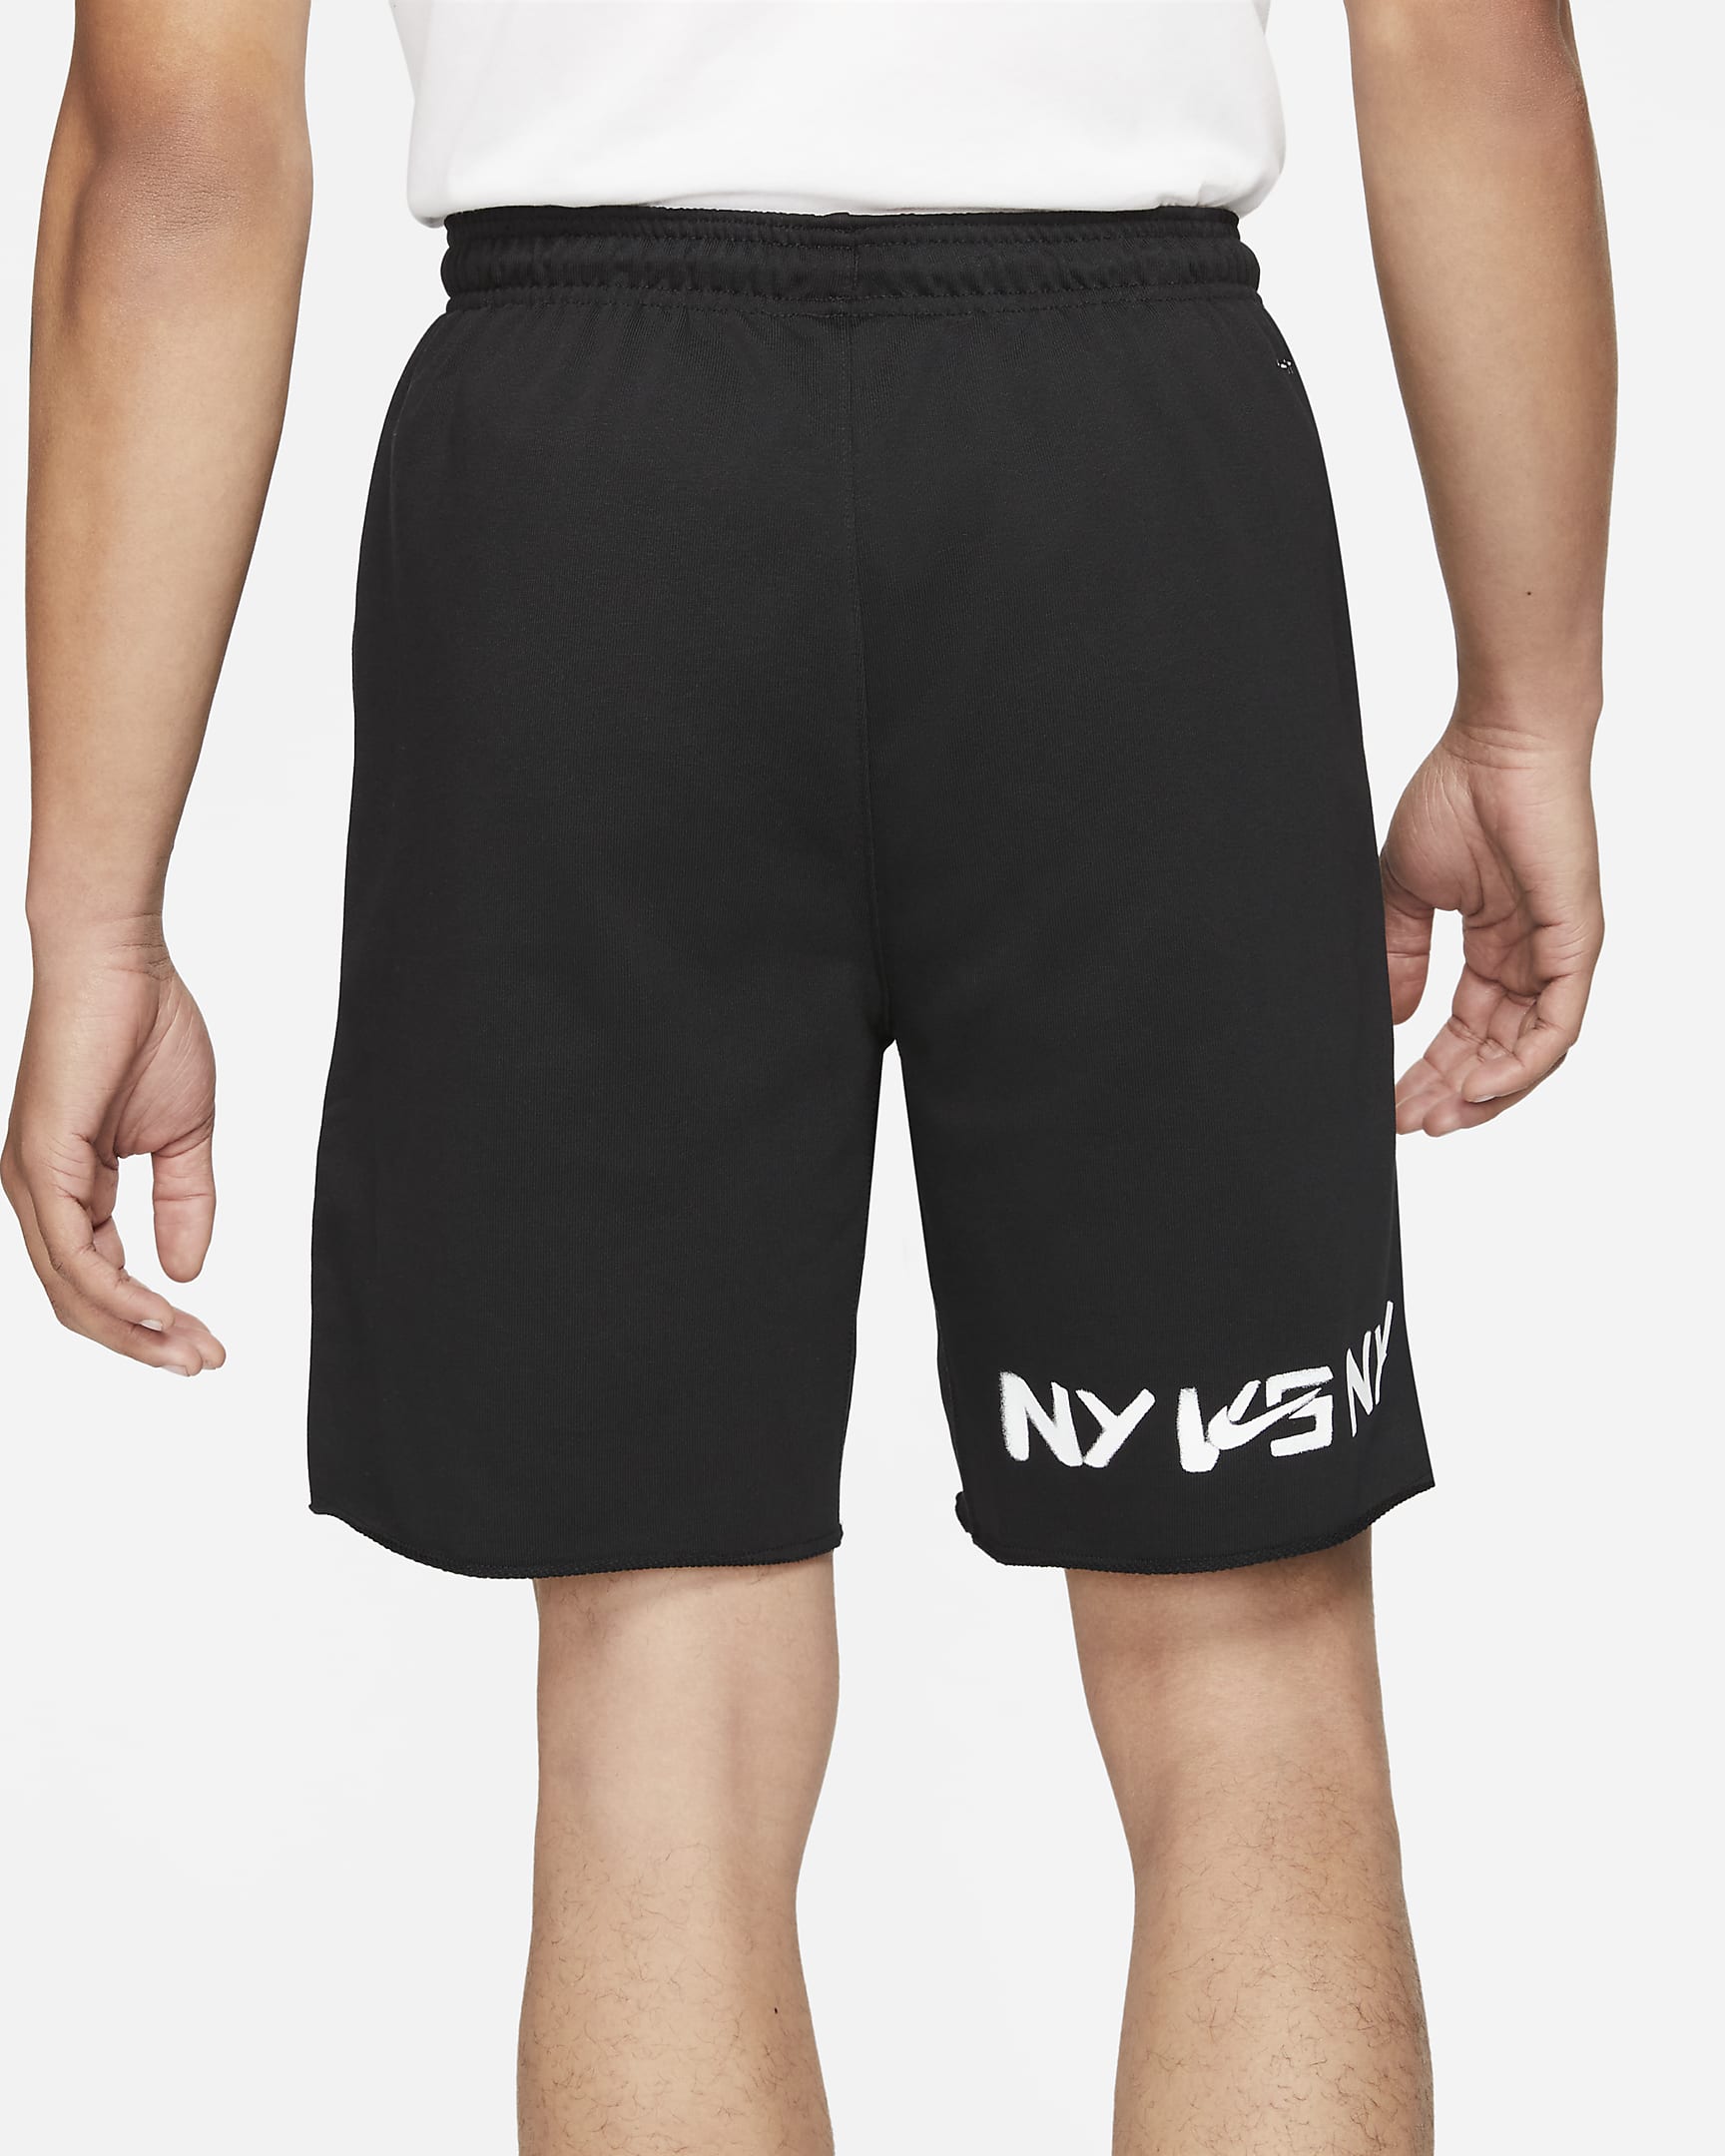 standard-issue-ny-vs-ny-mens-basketball-fleece-shorts-pv03s9-2.png